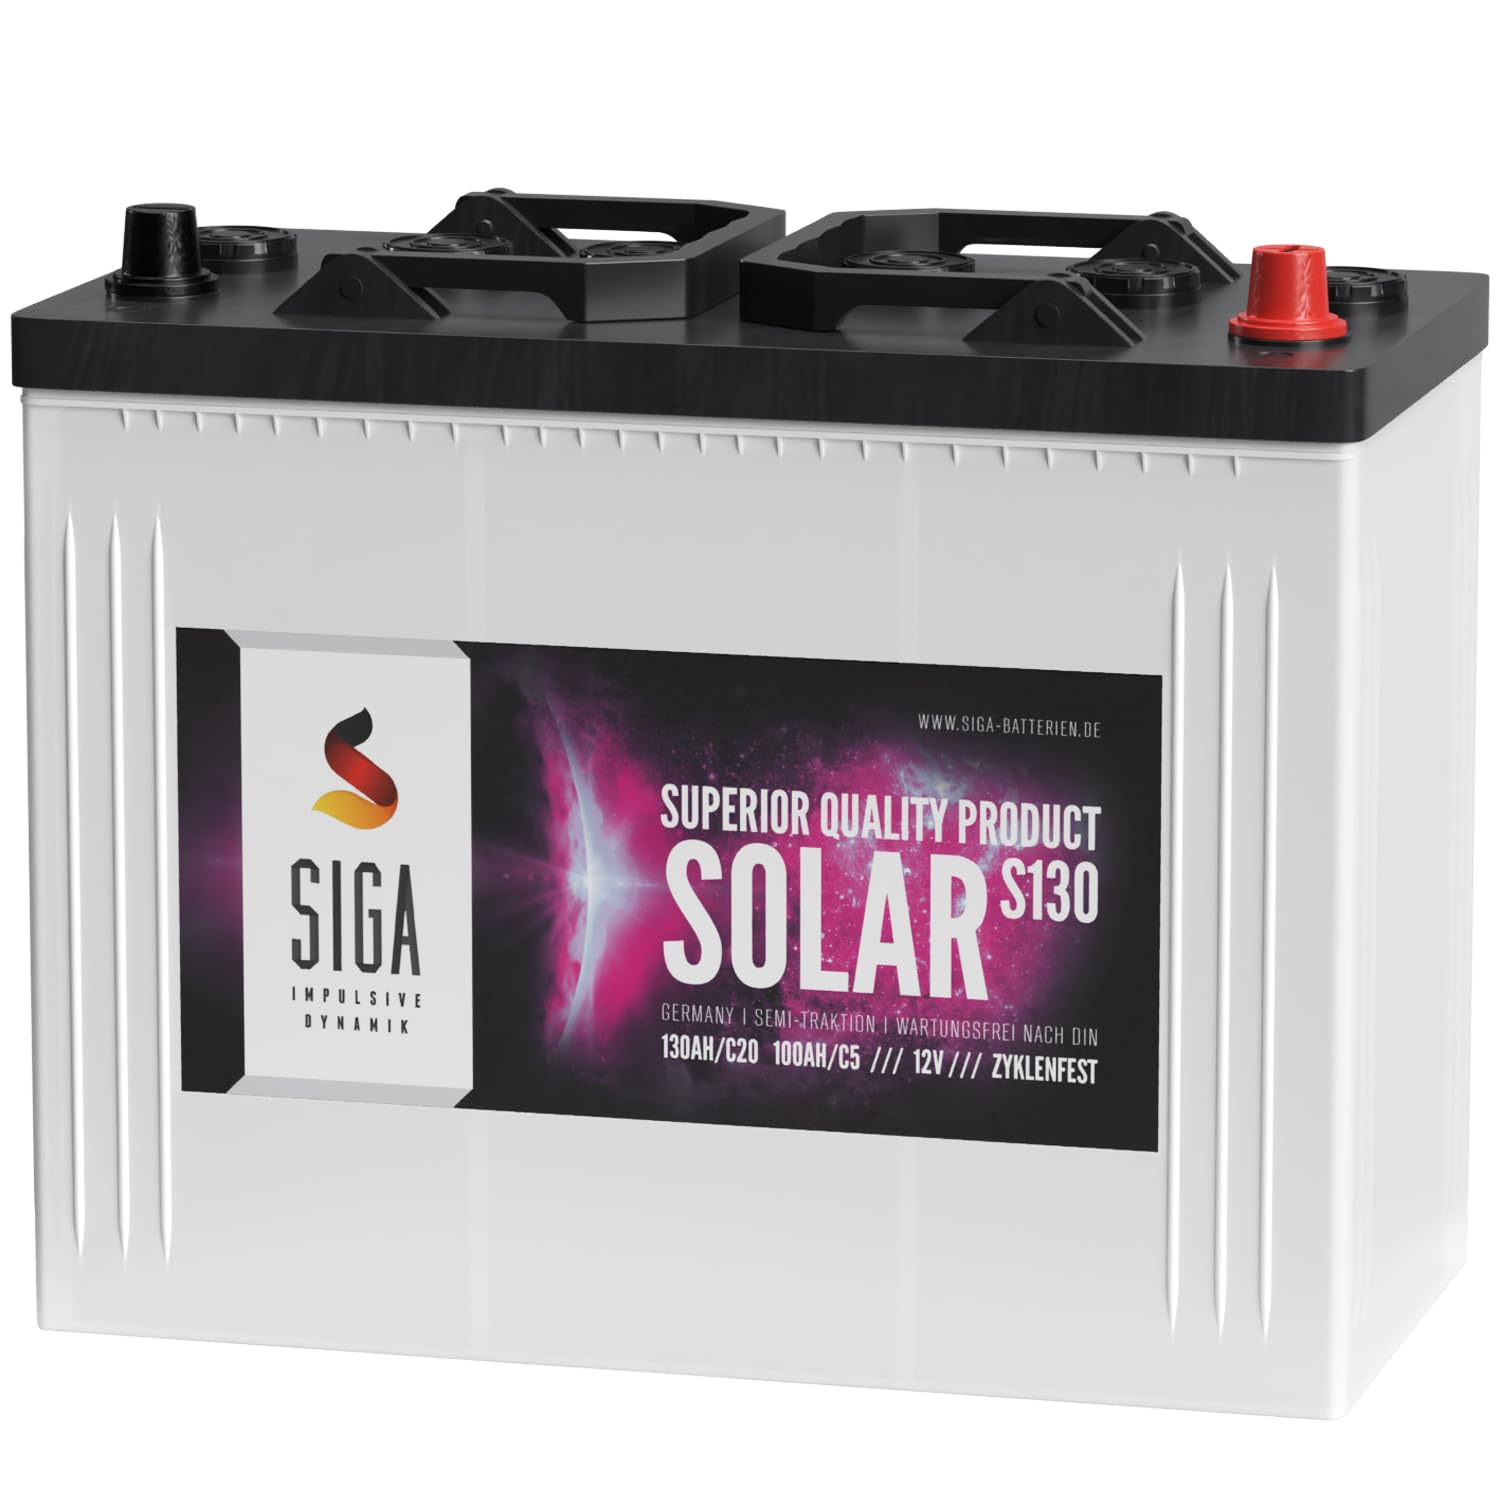 SIGA Solarbatterie 130Ah 12V Versorgungsbatterie Wohnmobil Mover Antriebs Batterie 120Ah 125Ah von SIGA IMPULSIVE DYNAMIK